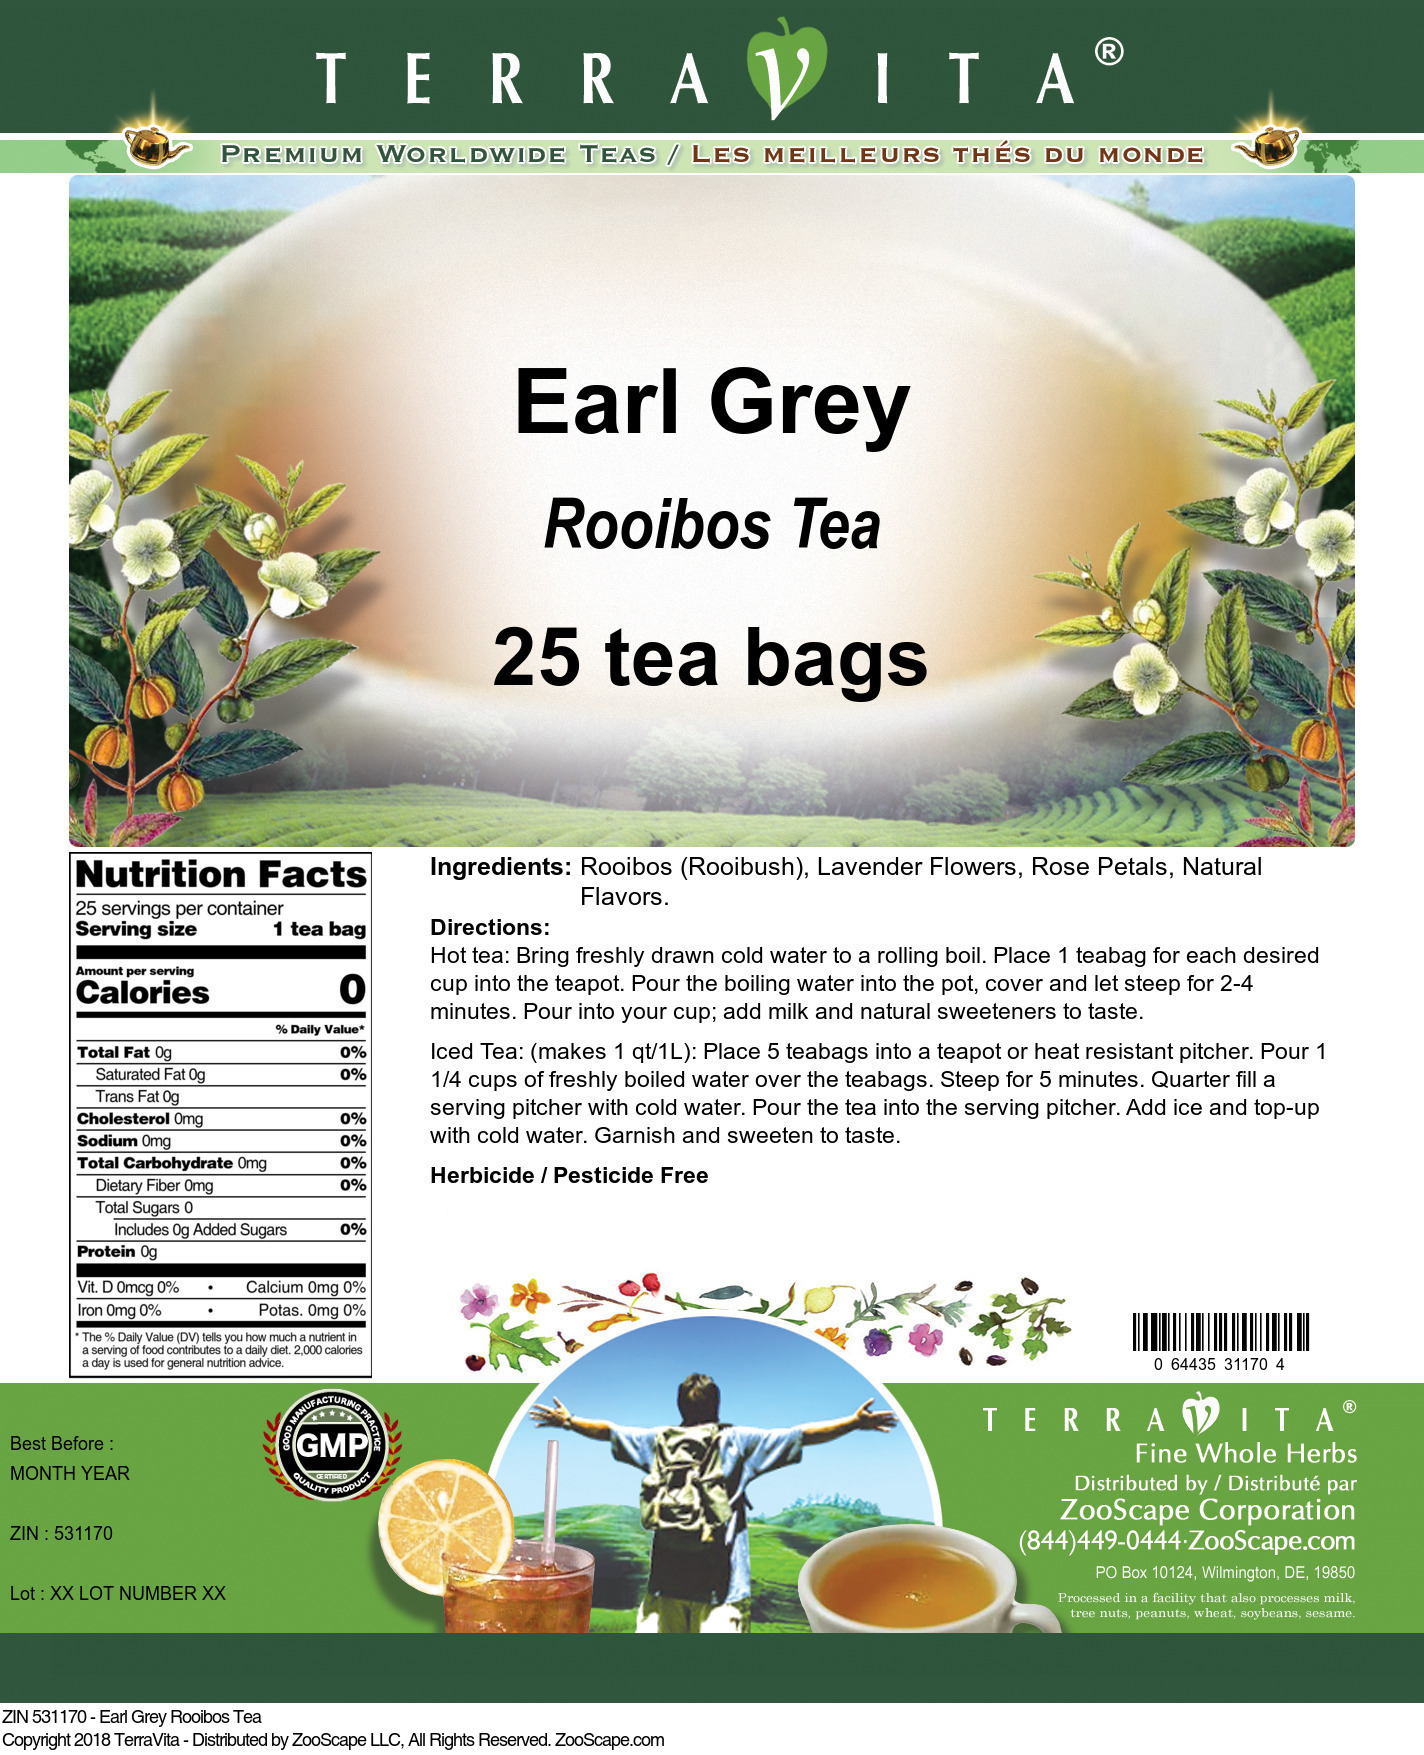 Earl Grey Rooibos Tea - Label